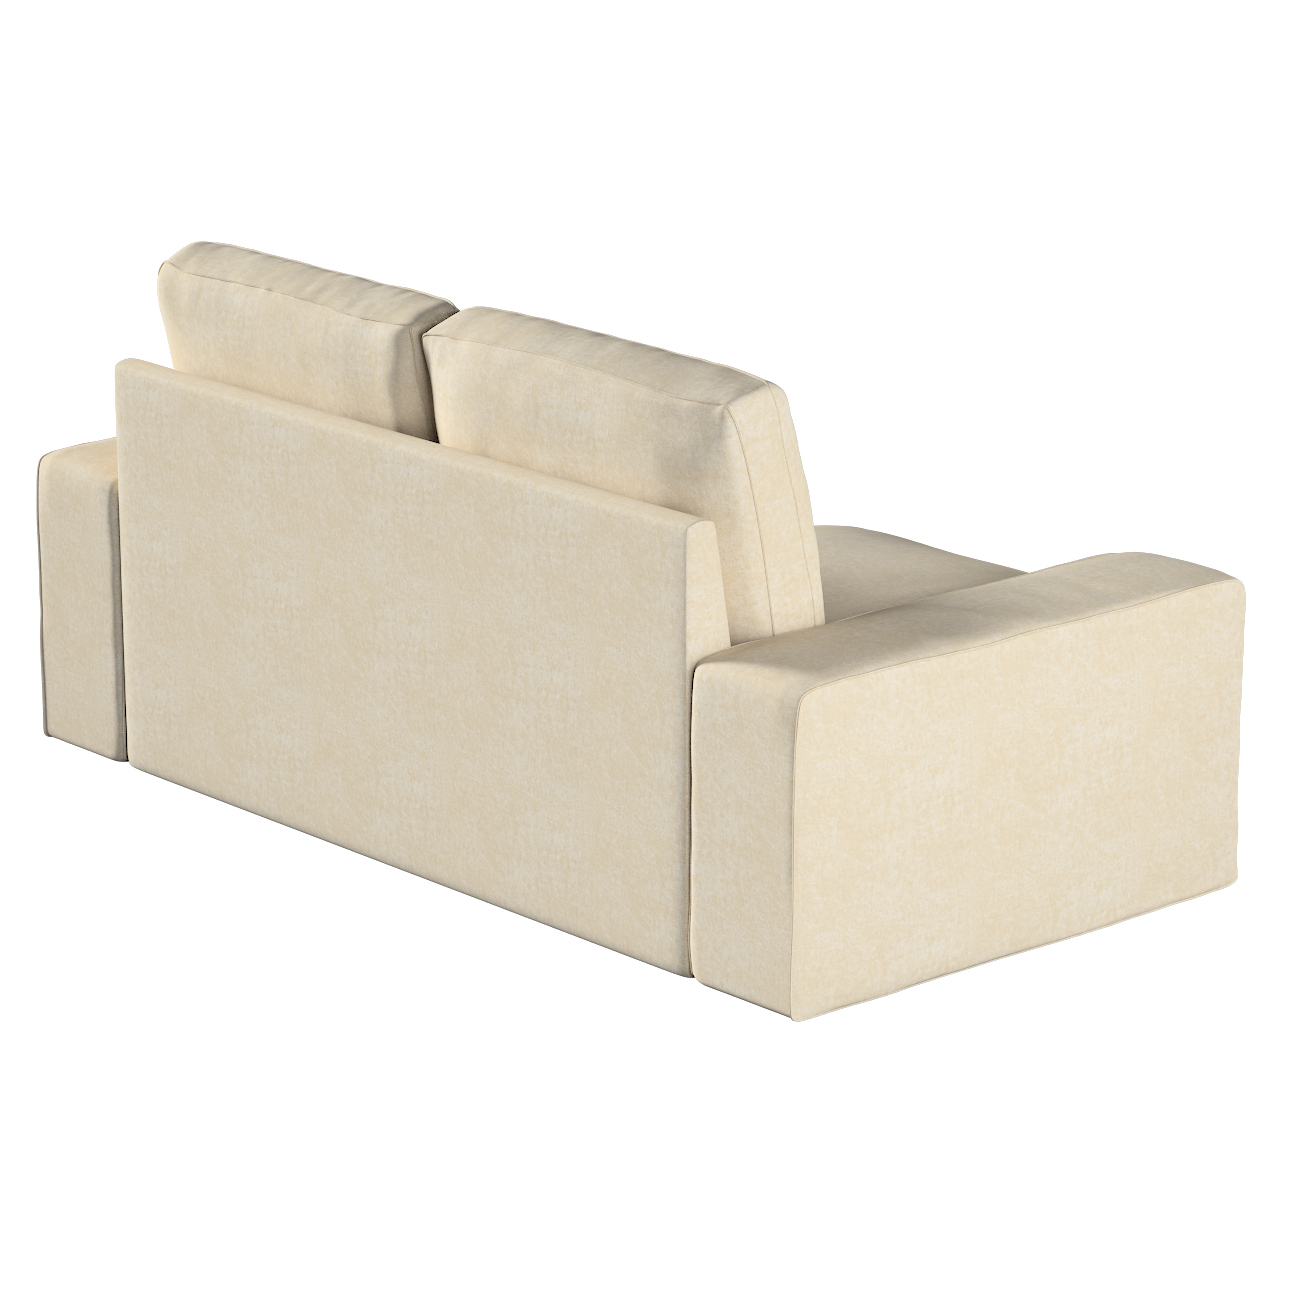 Bezug für Kivik 2-Sitzer Sofa, grau-beige, Bezug für Sofa Kivik 2-Sitzer, C günstig online kaufen